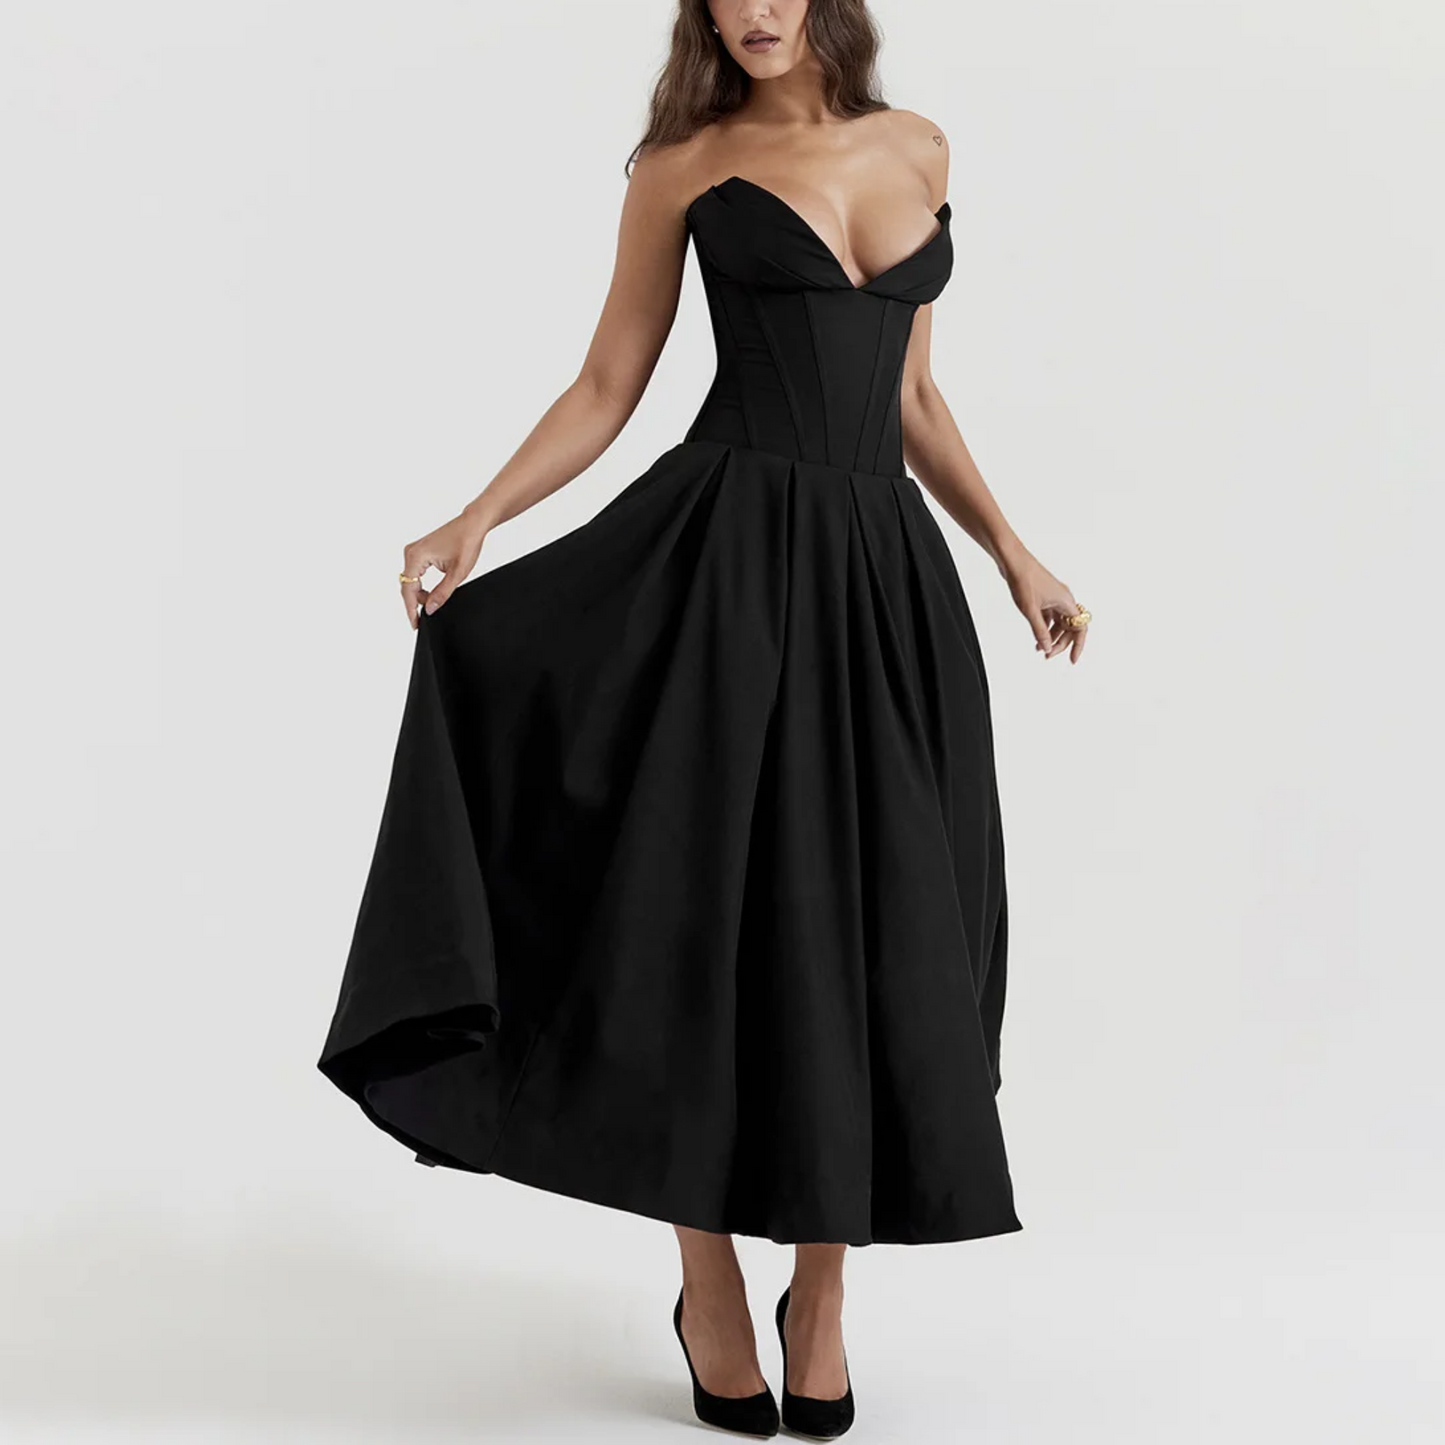 Juana - Long Black Strapless A-Line Corset Dress